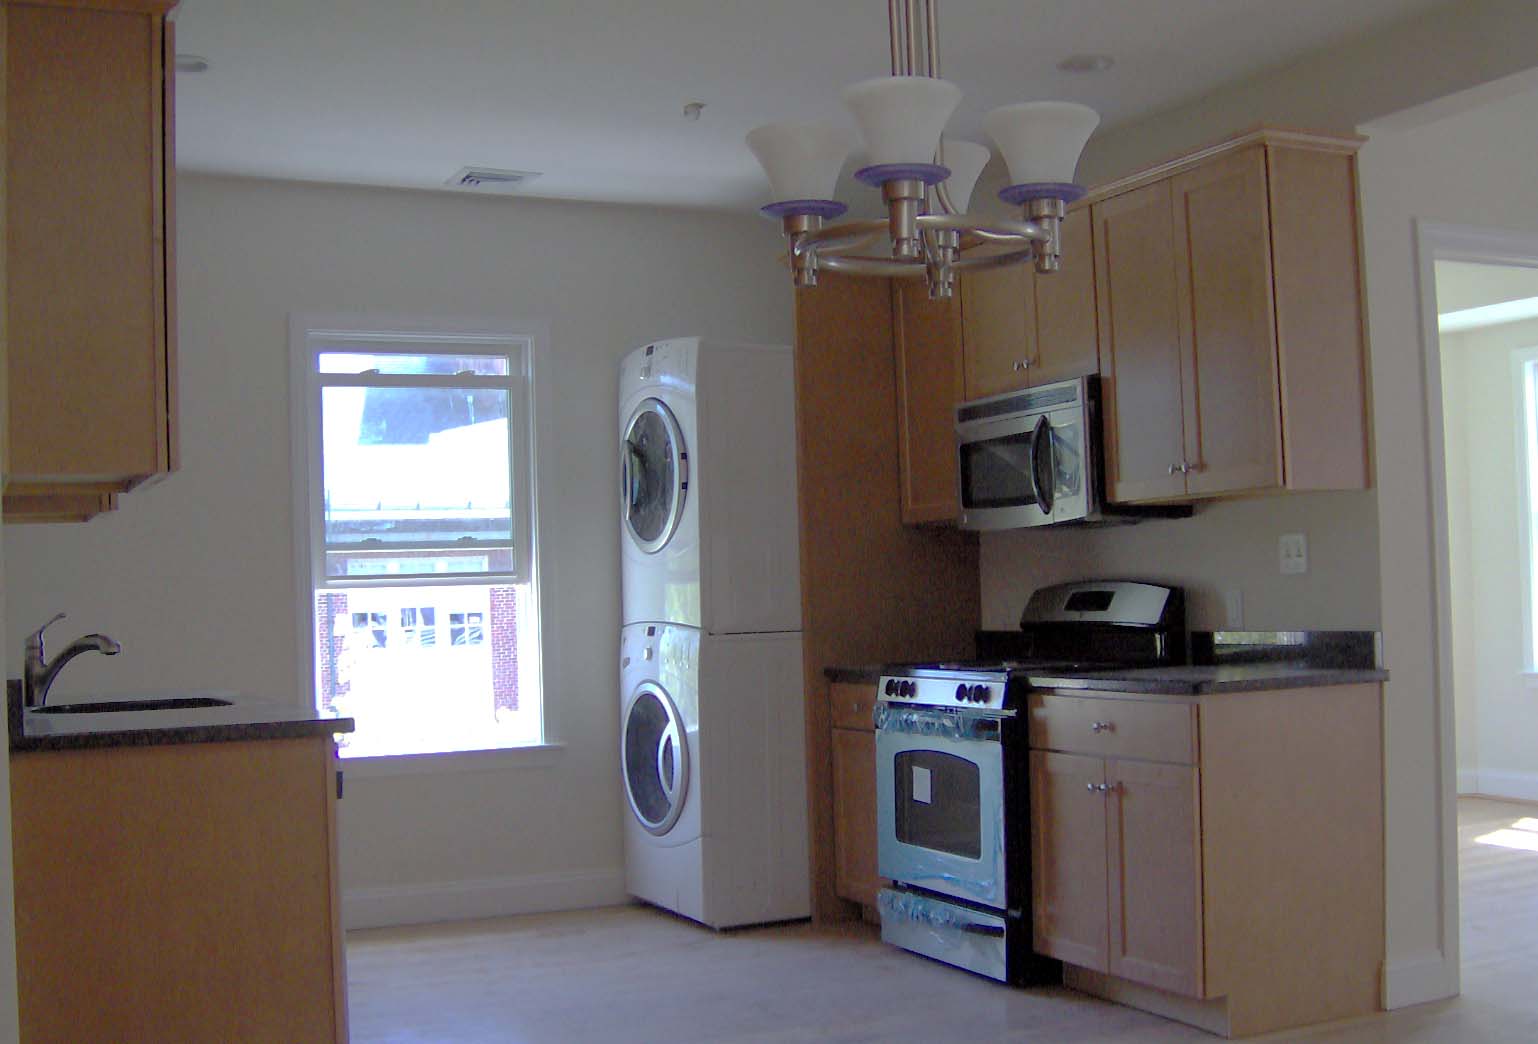 Photos of apartment on Washington St.,Brookline MA 02446